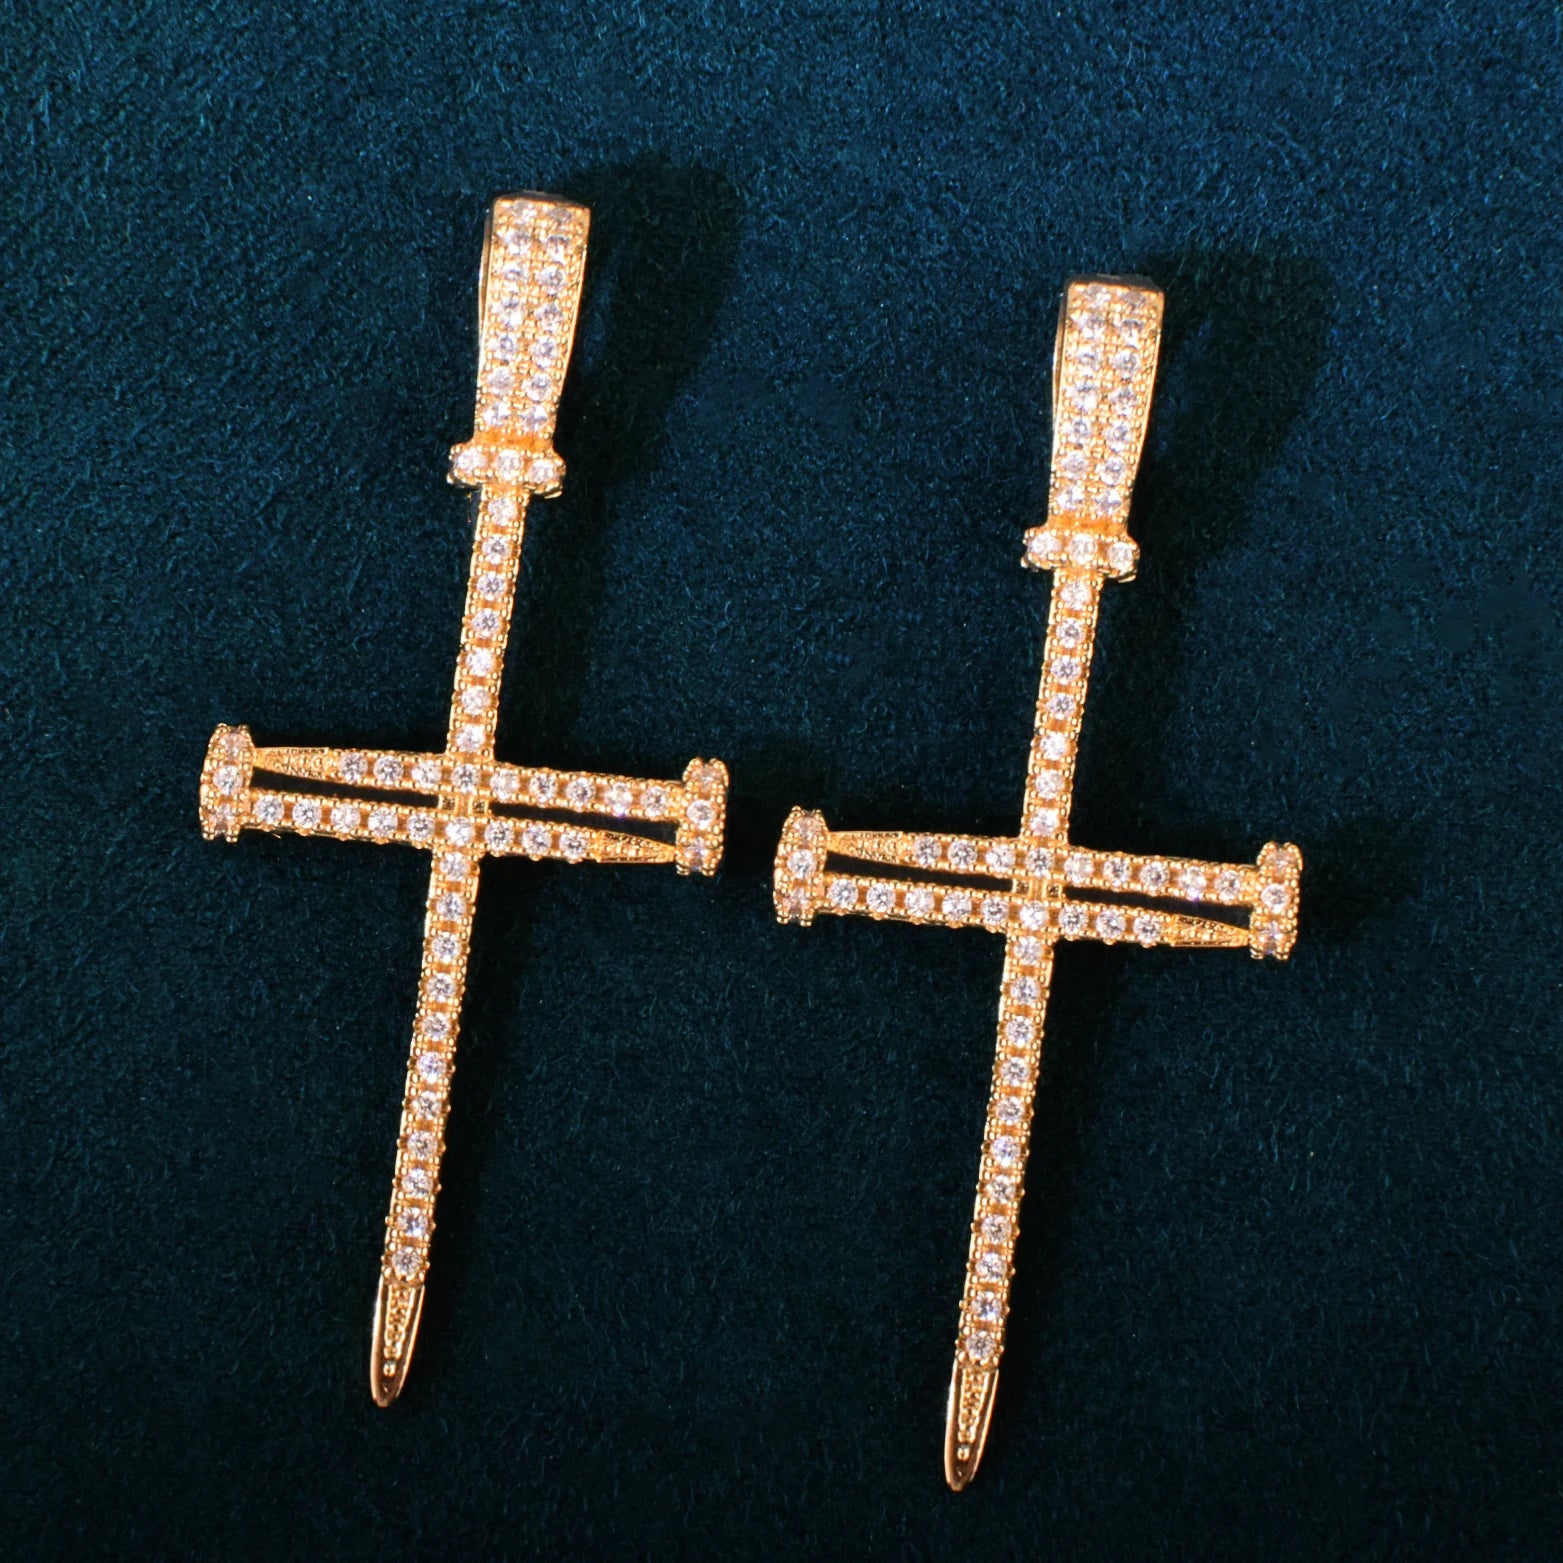 Nail Cross Diamond Pendant